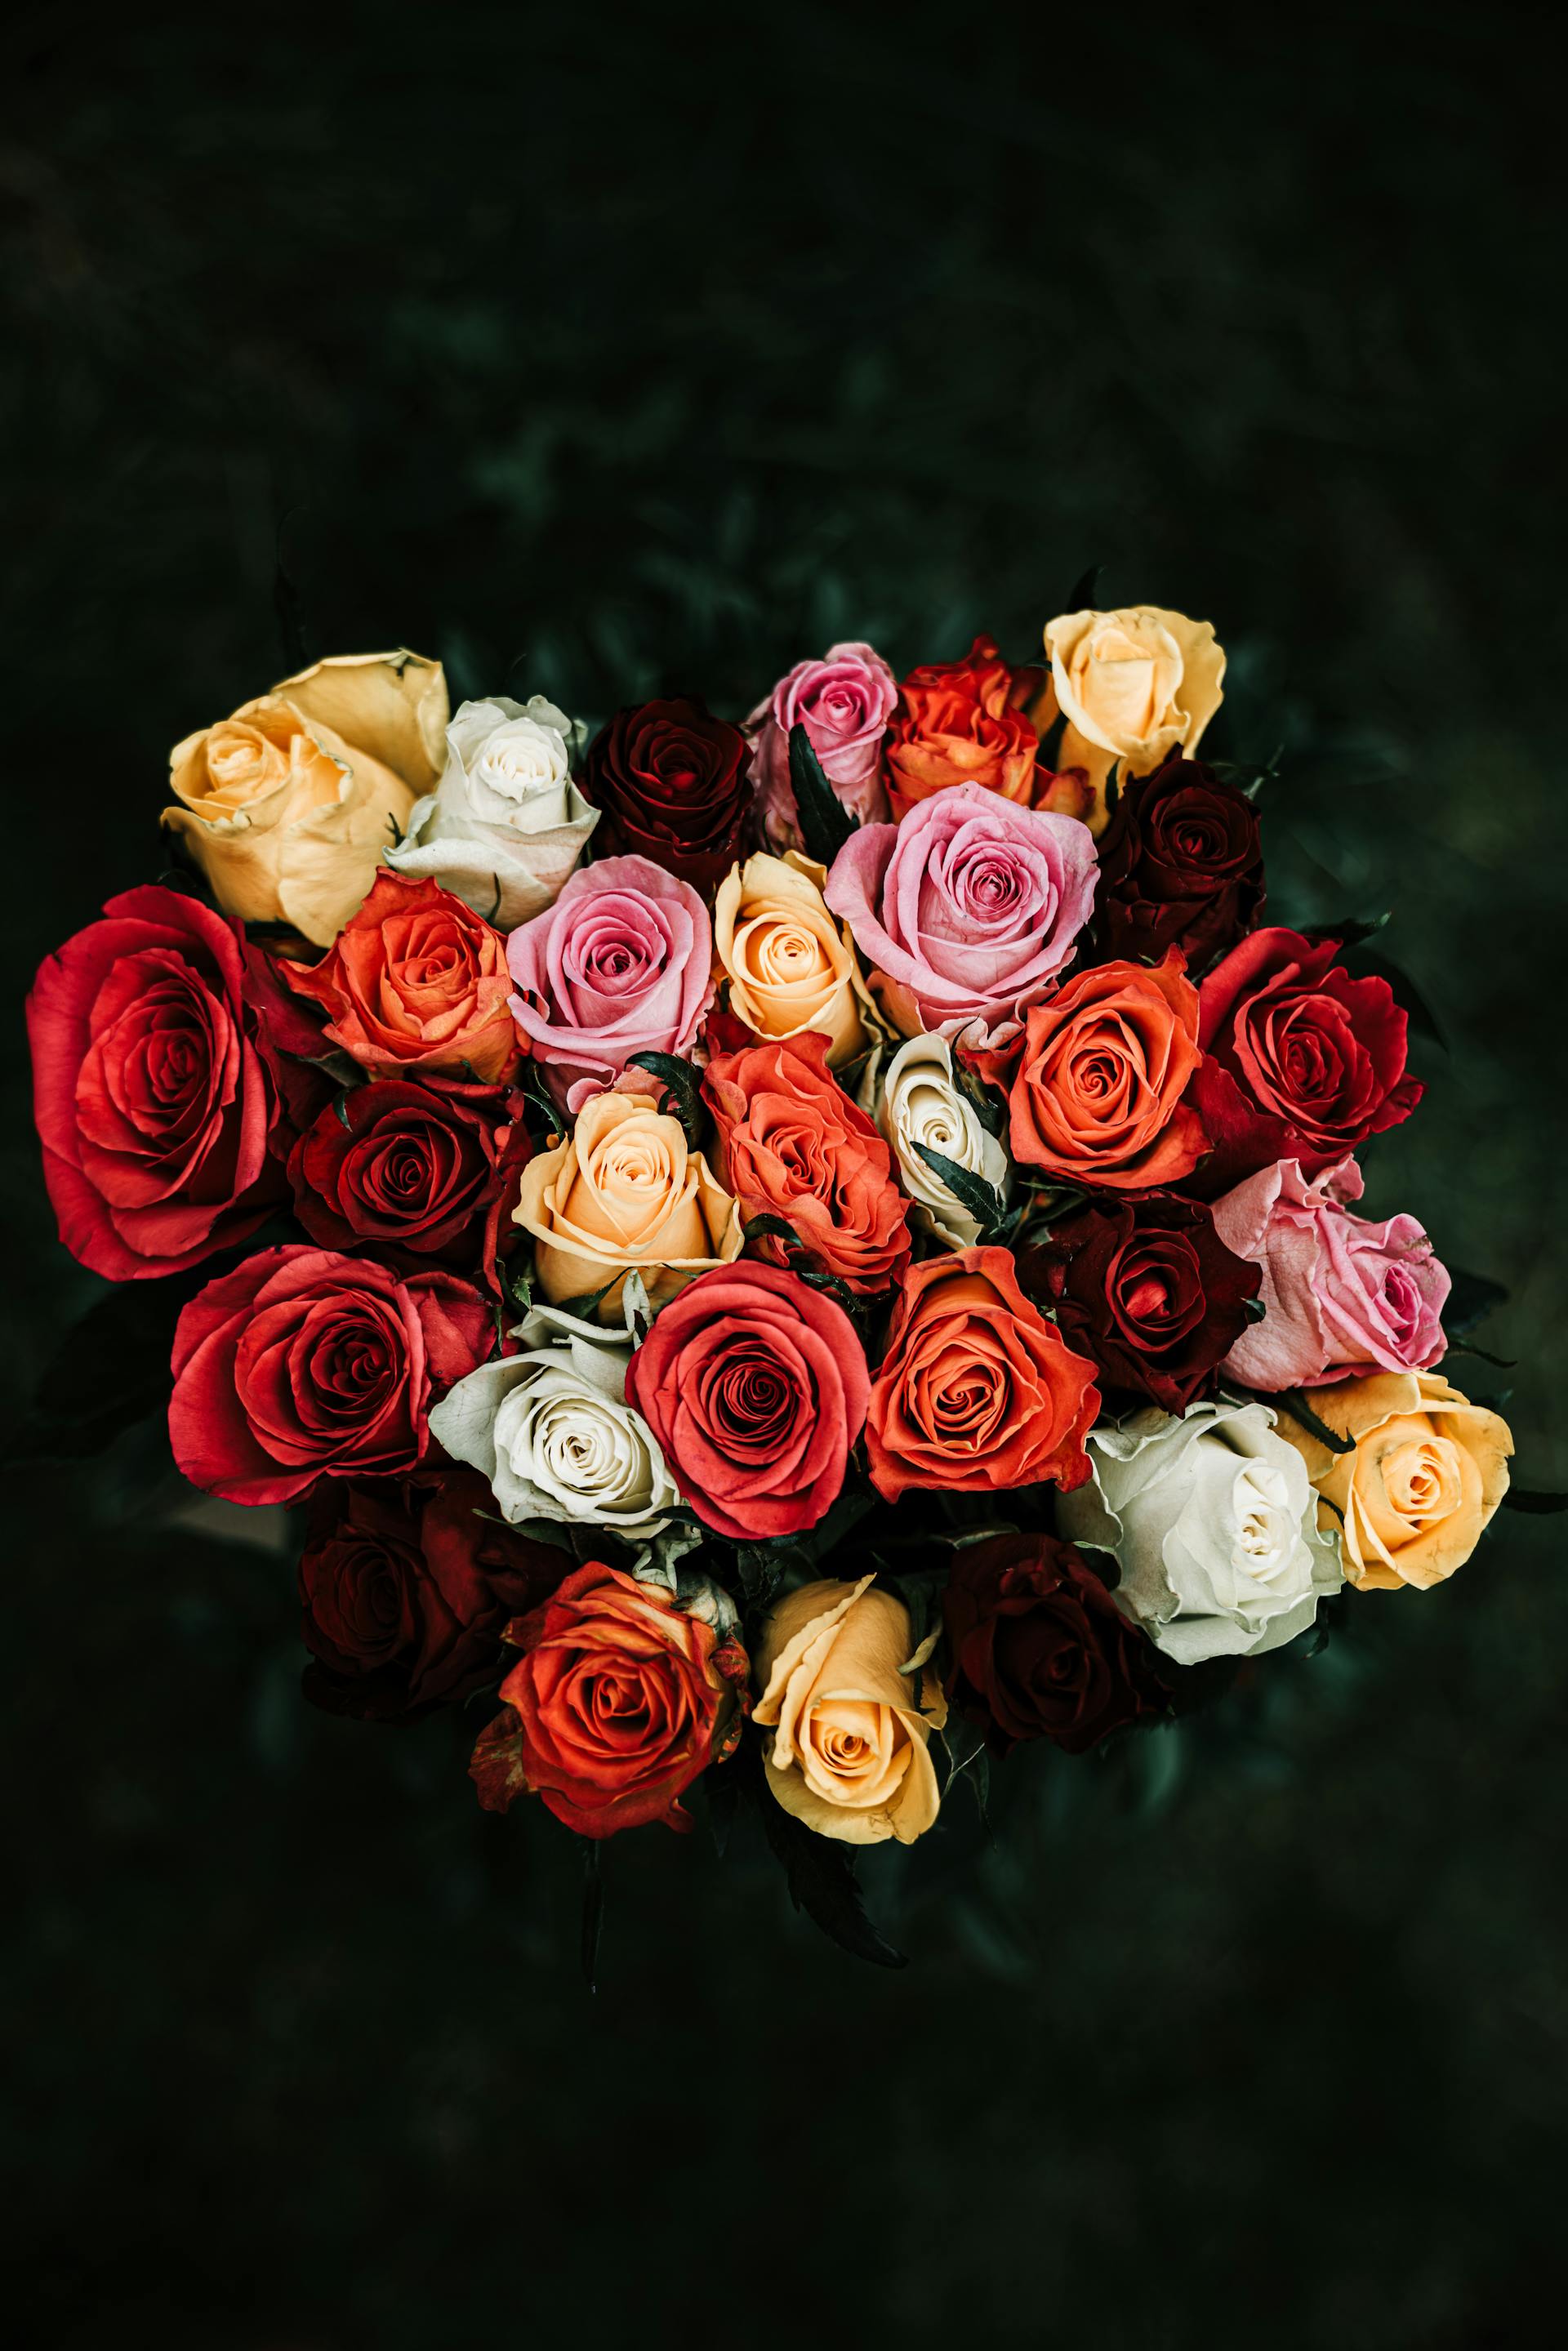 A bouquet of flowers | Source: Pexels